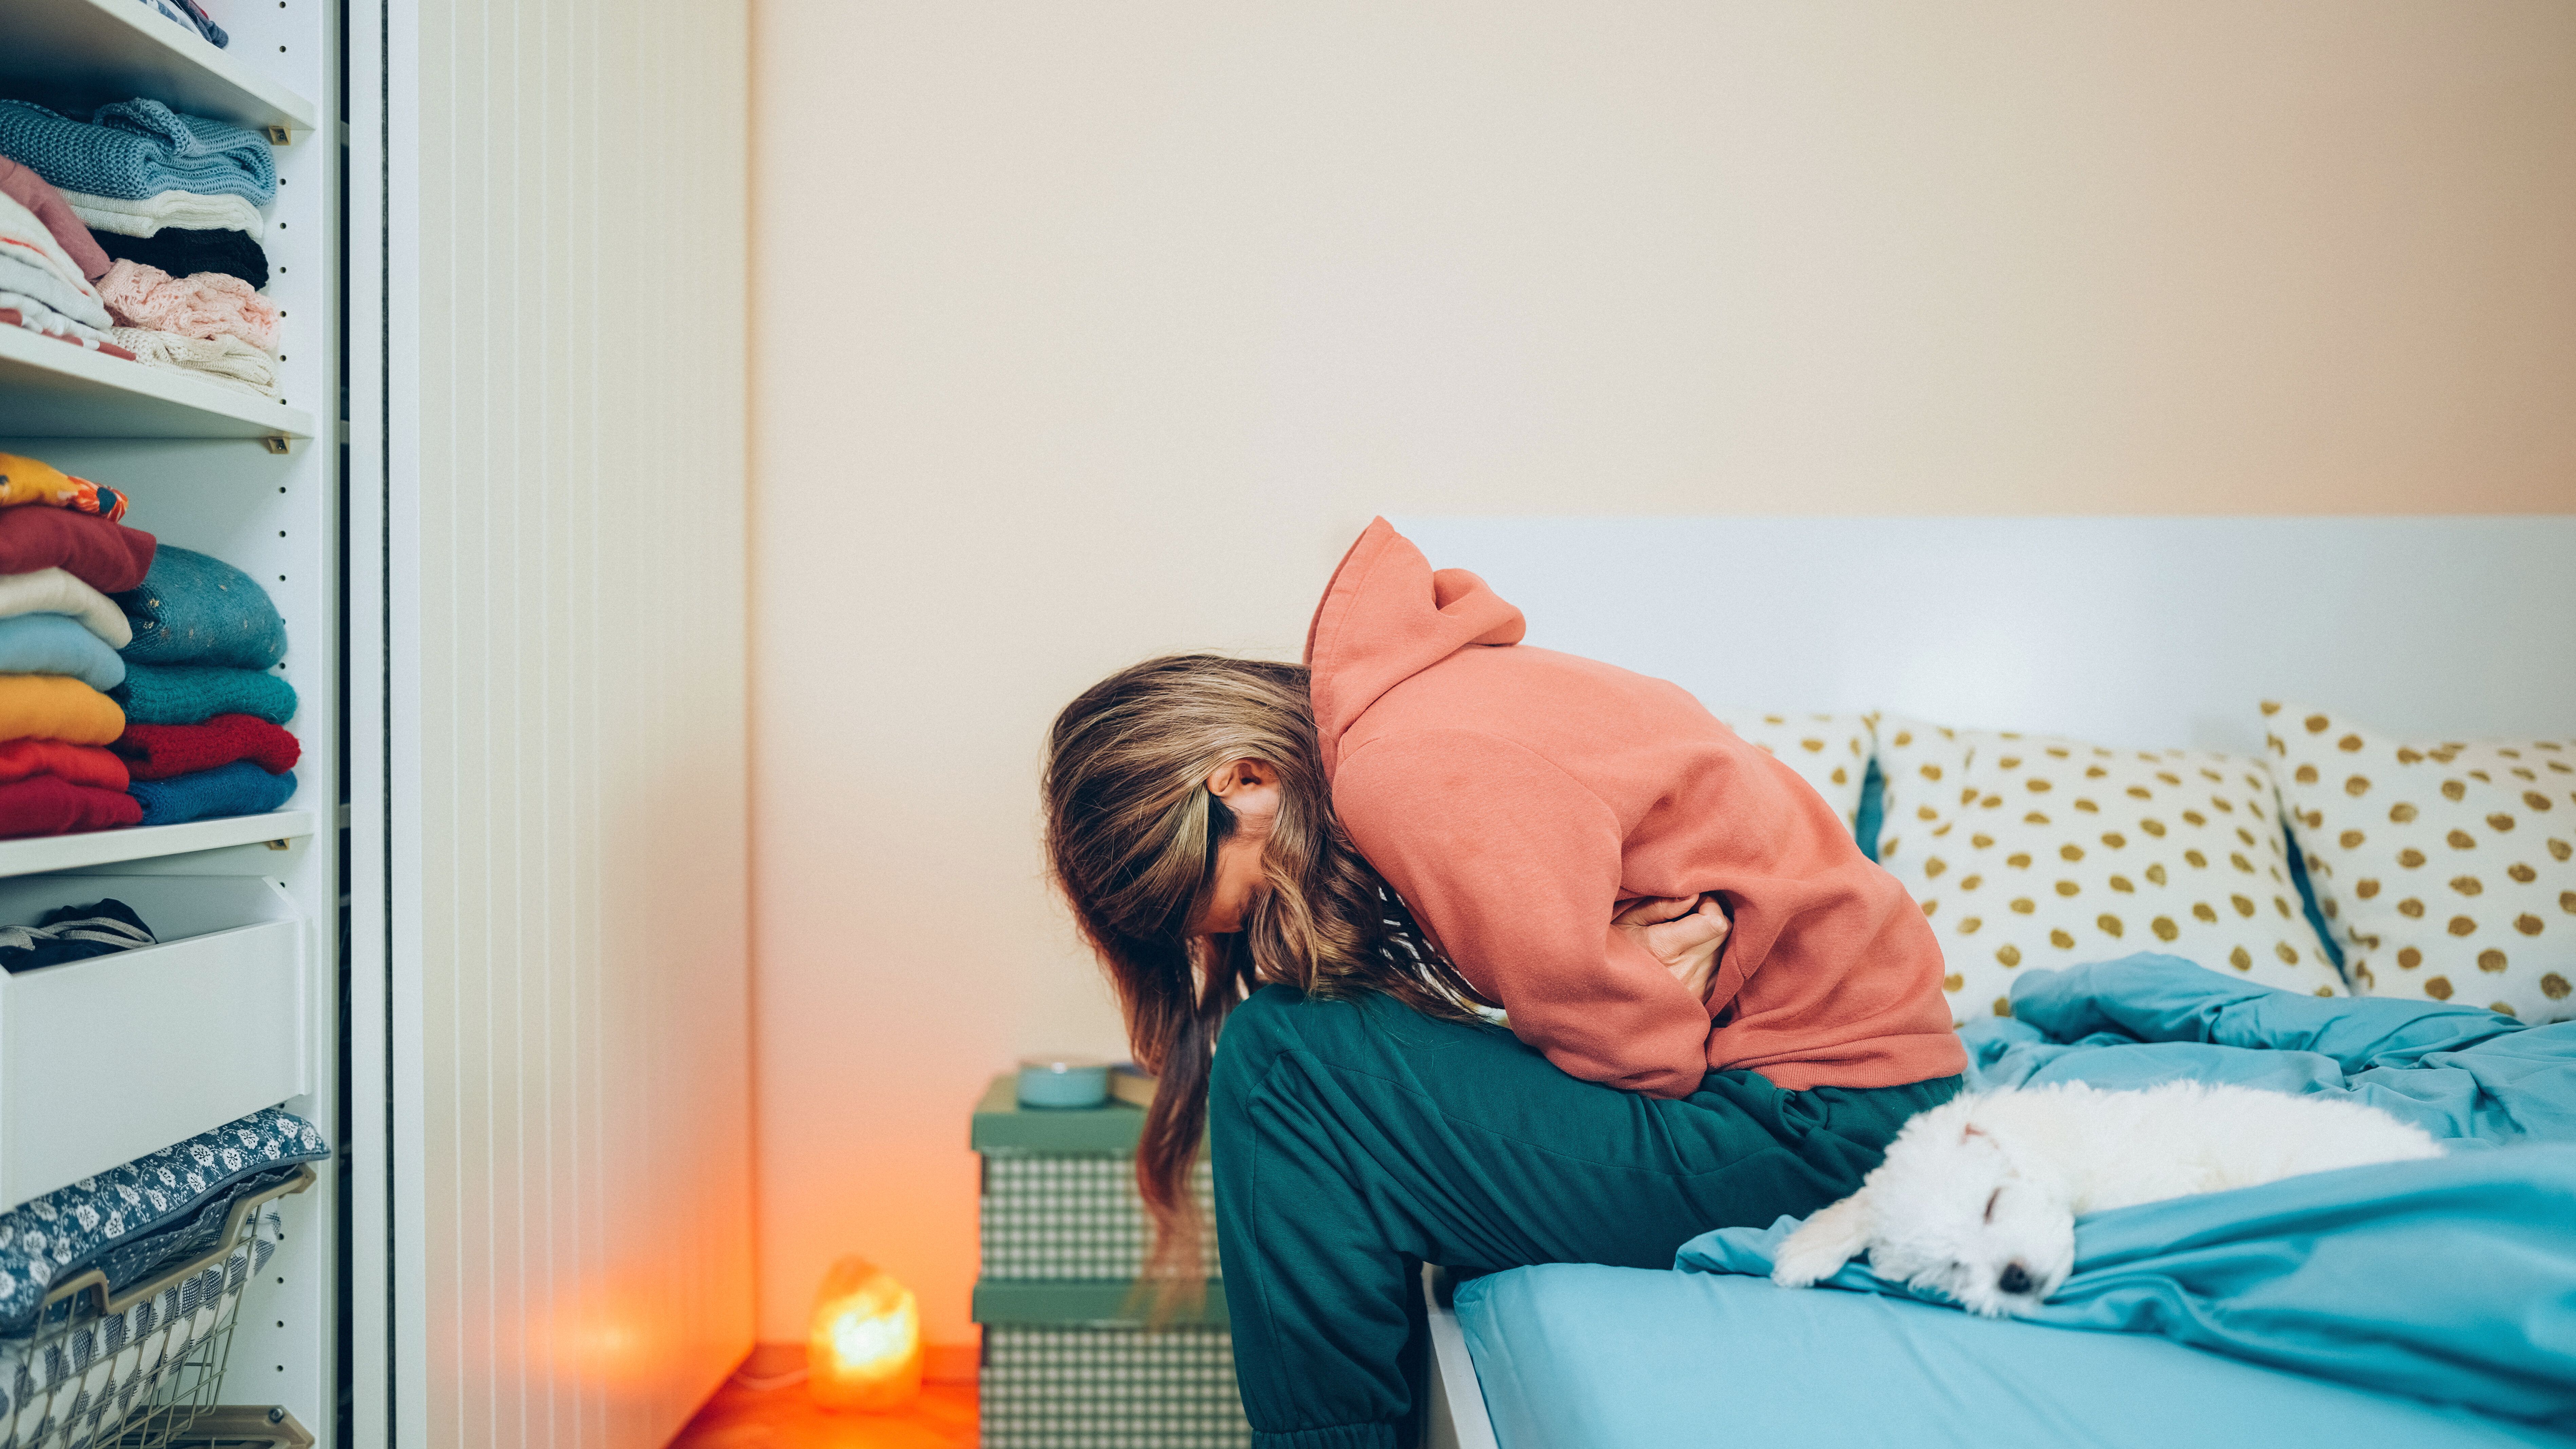 Intense periods and cramping are hallmark symptoms of endometriosis.